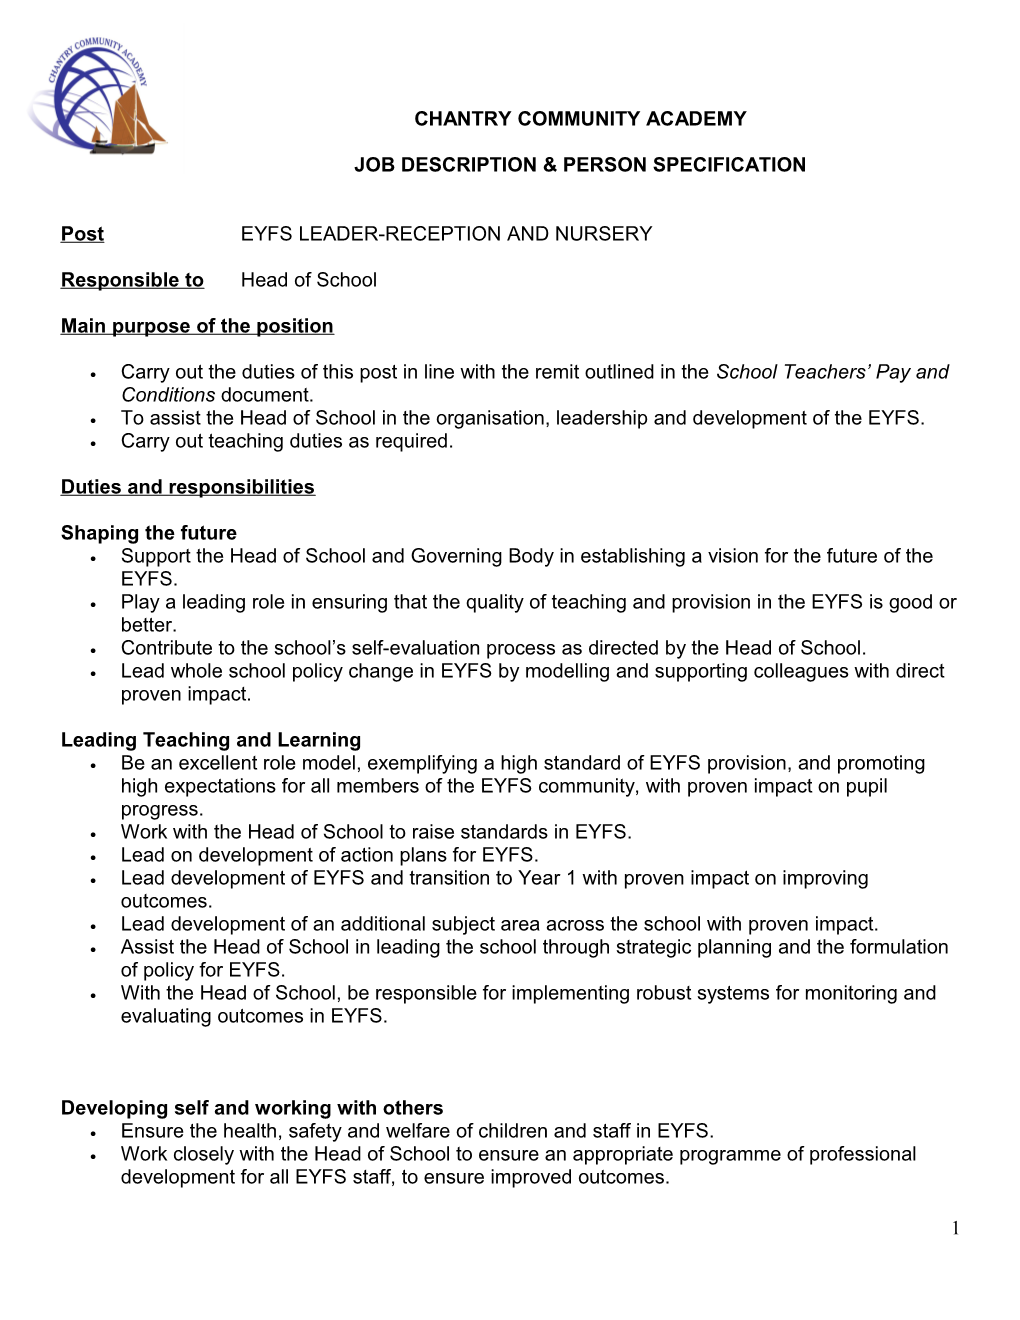 Job Description & Person Specification s11